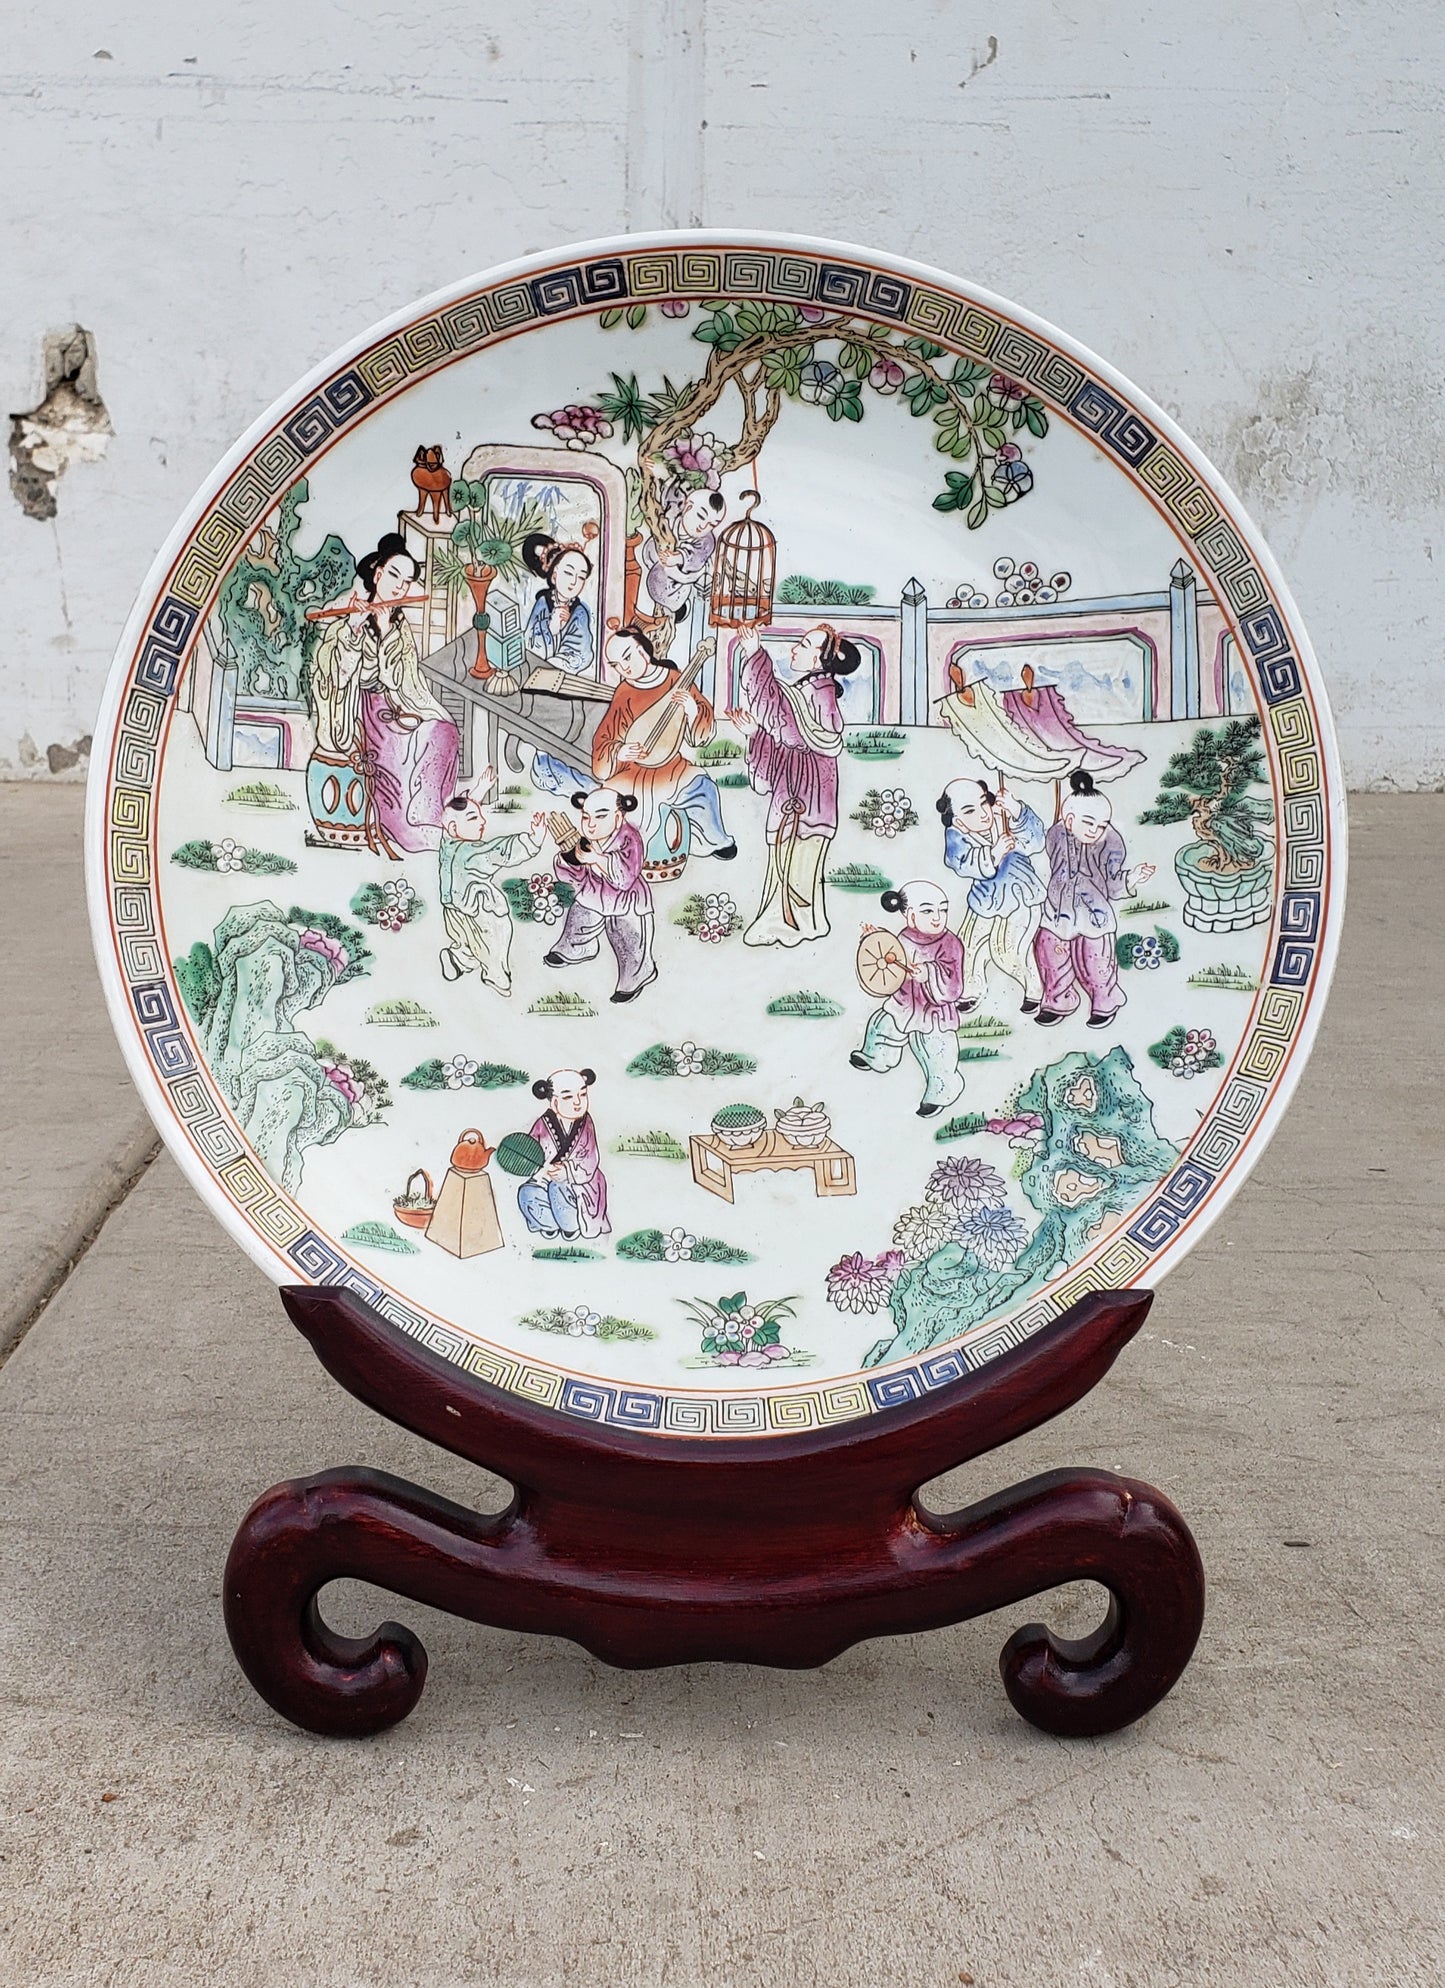 Chinese Porcelain Bowl